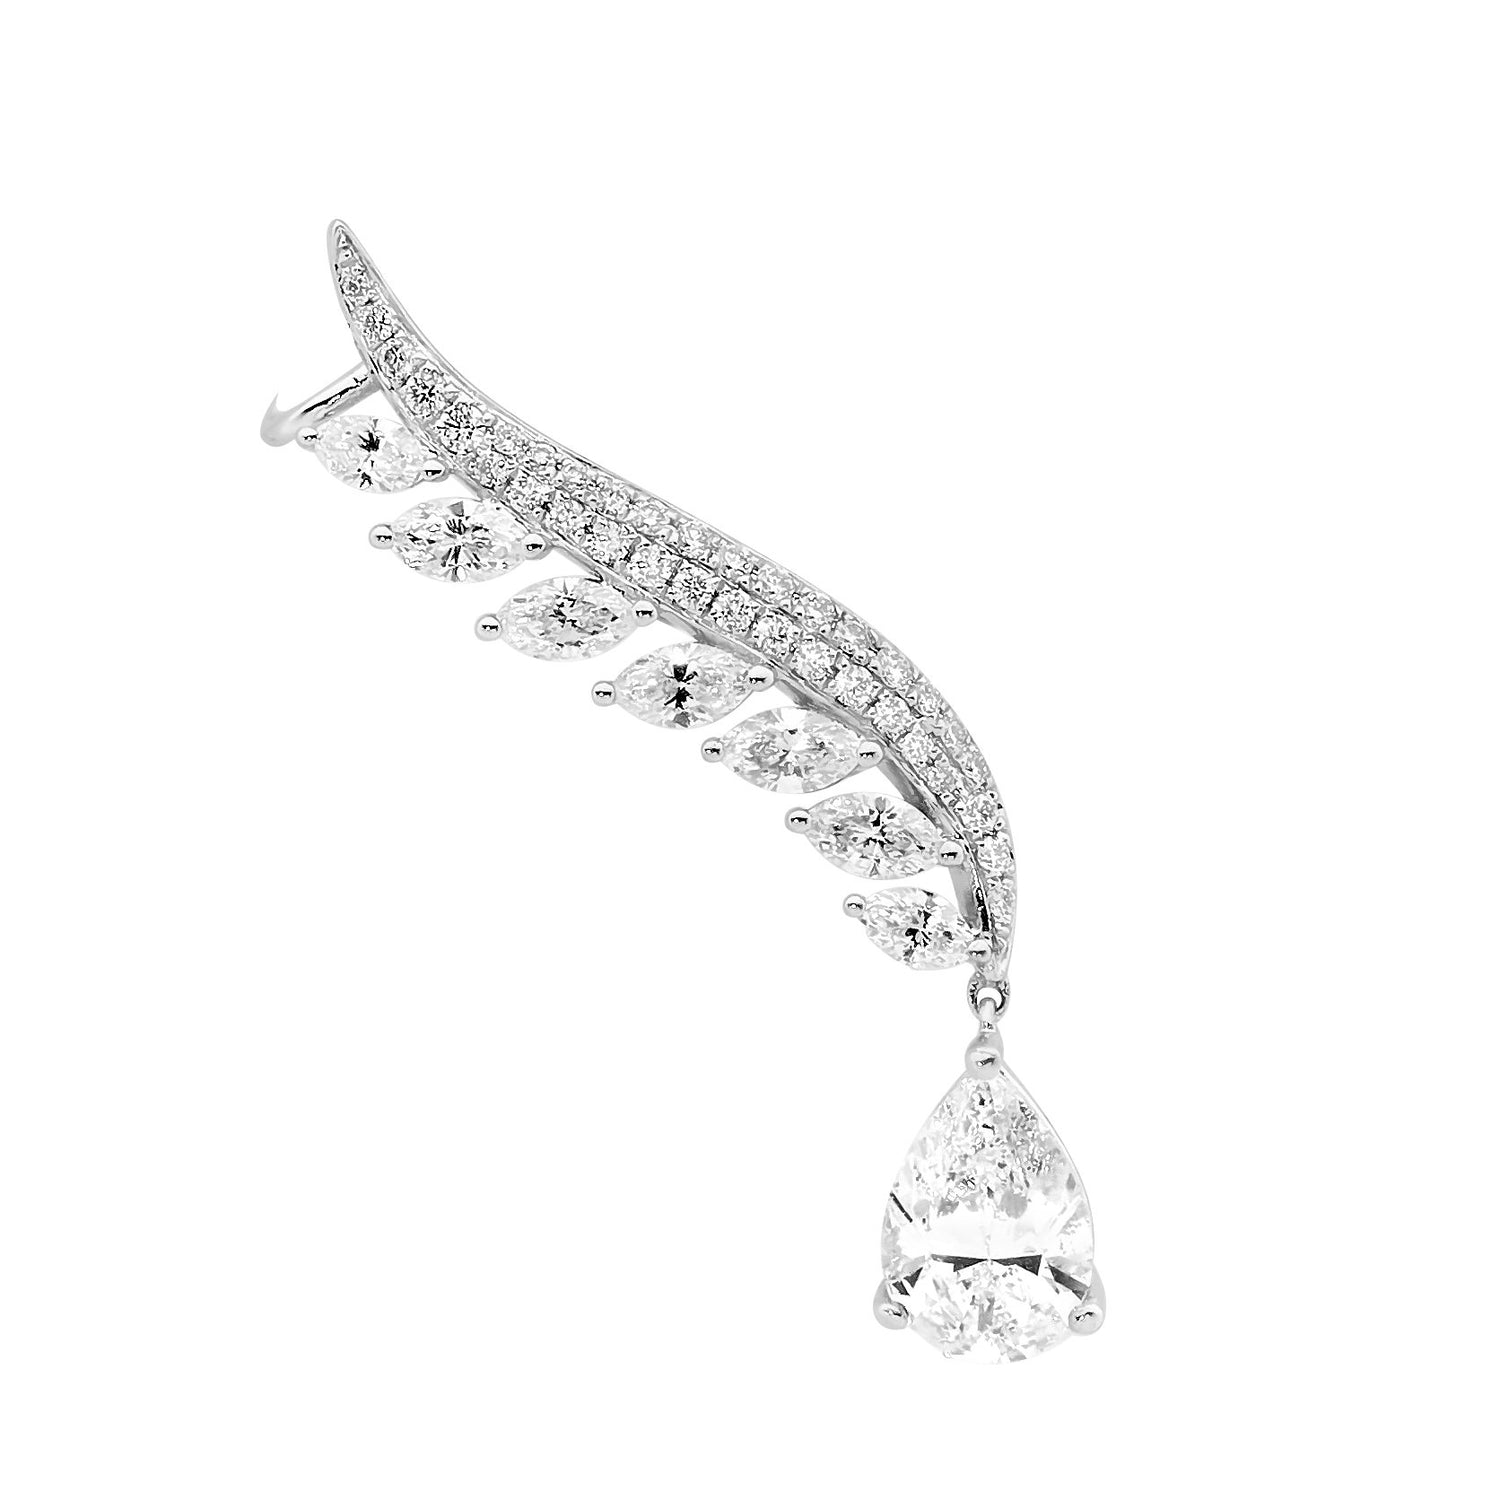 House of K'dor Blanc Diamond Earrings Diamonds Stud, Drop, Ear Cuff and Hoop Ear Jewels